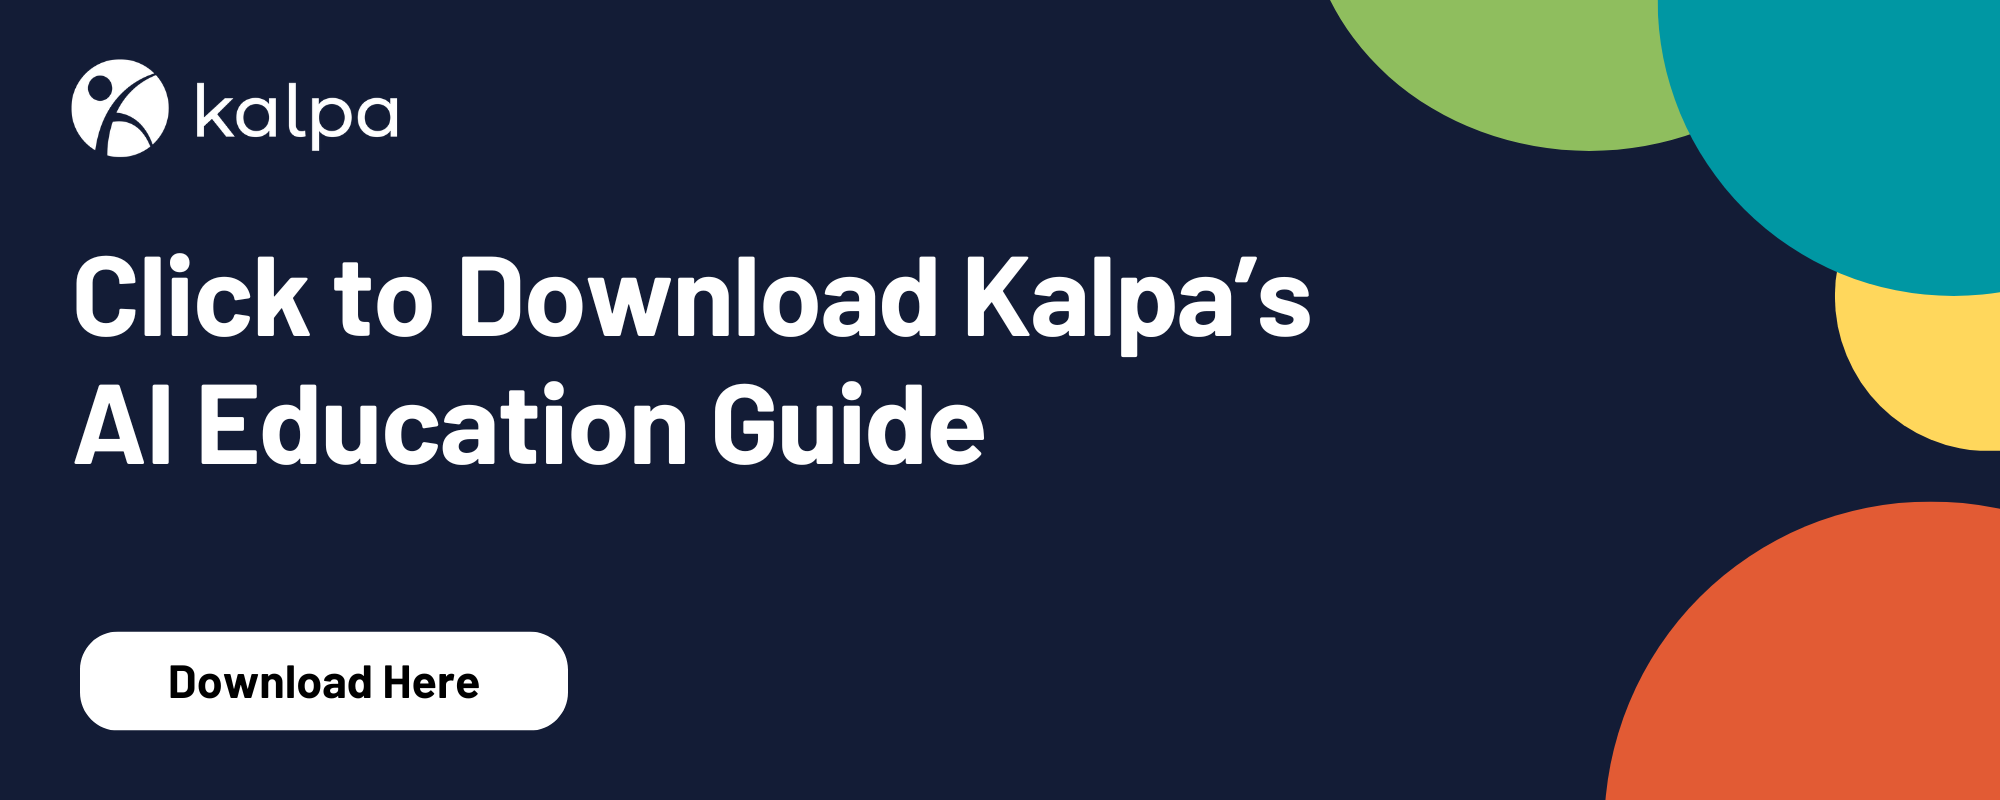 Kalpa's AI Education Guide 